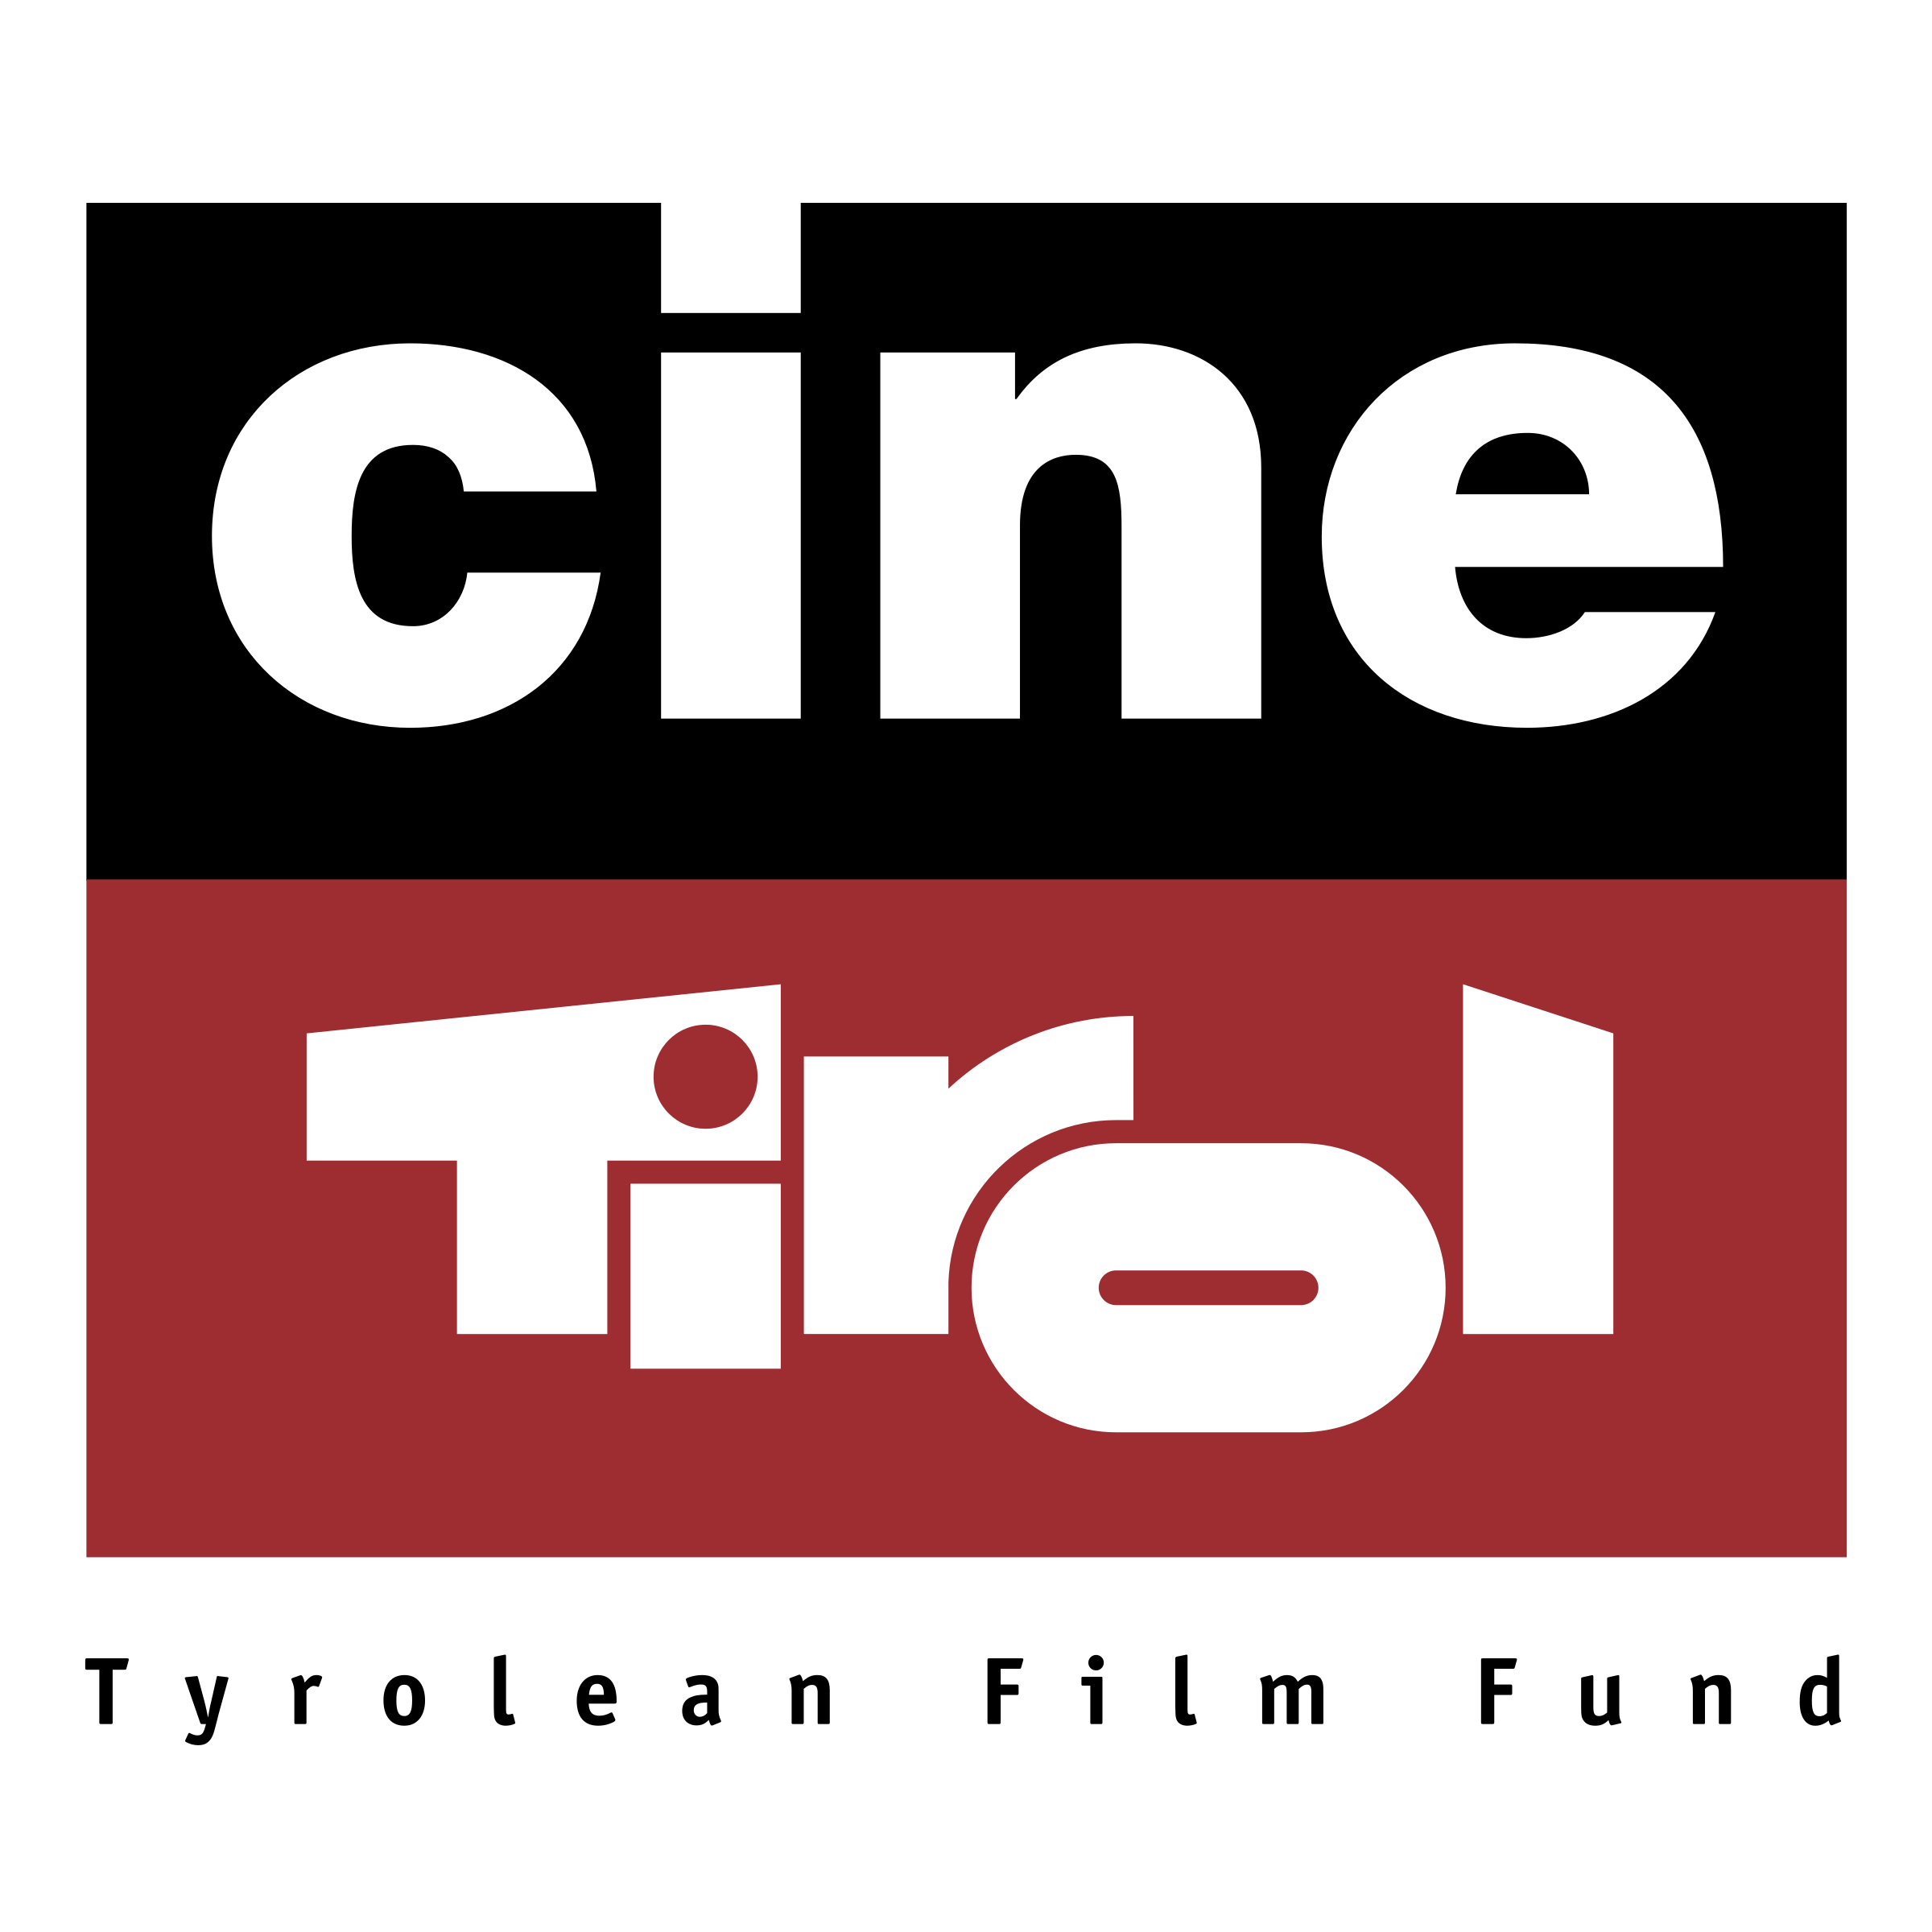 Cine Logo - Cine Tirol Logo PNG Transparent & SVG Vector - Freebie Supply